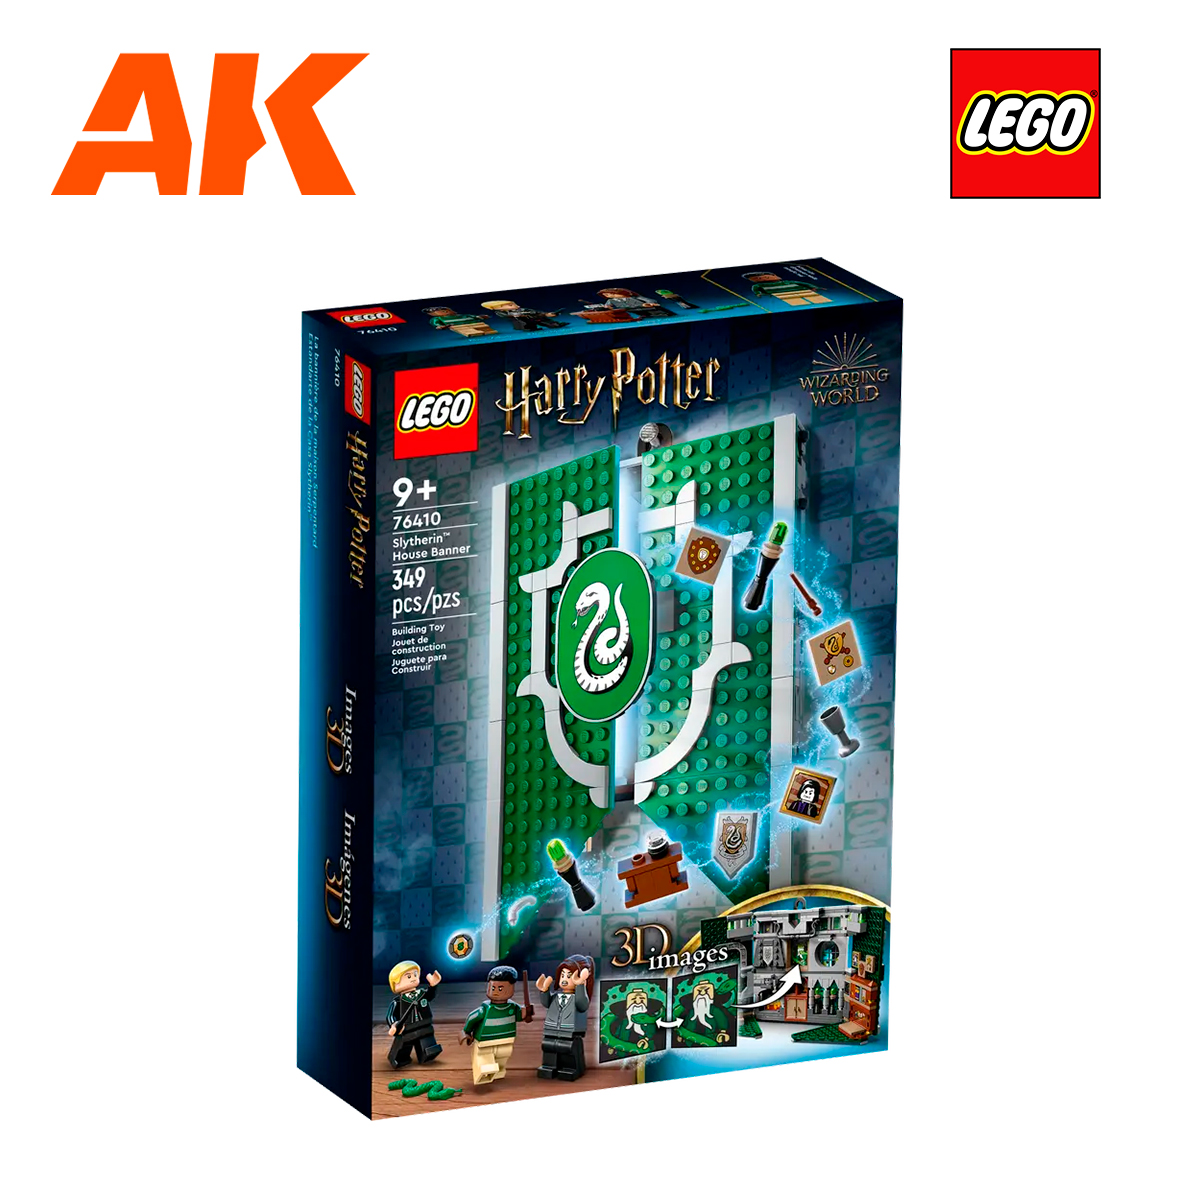 https://ak-interactive.com/wp-content/uploads/2023/05/LEGO76410.jpg